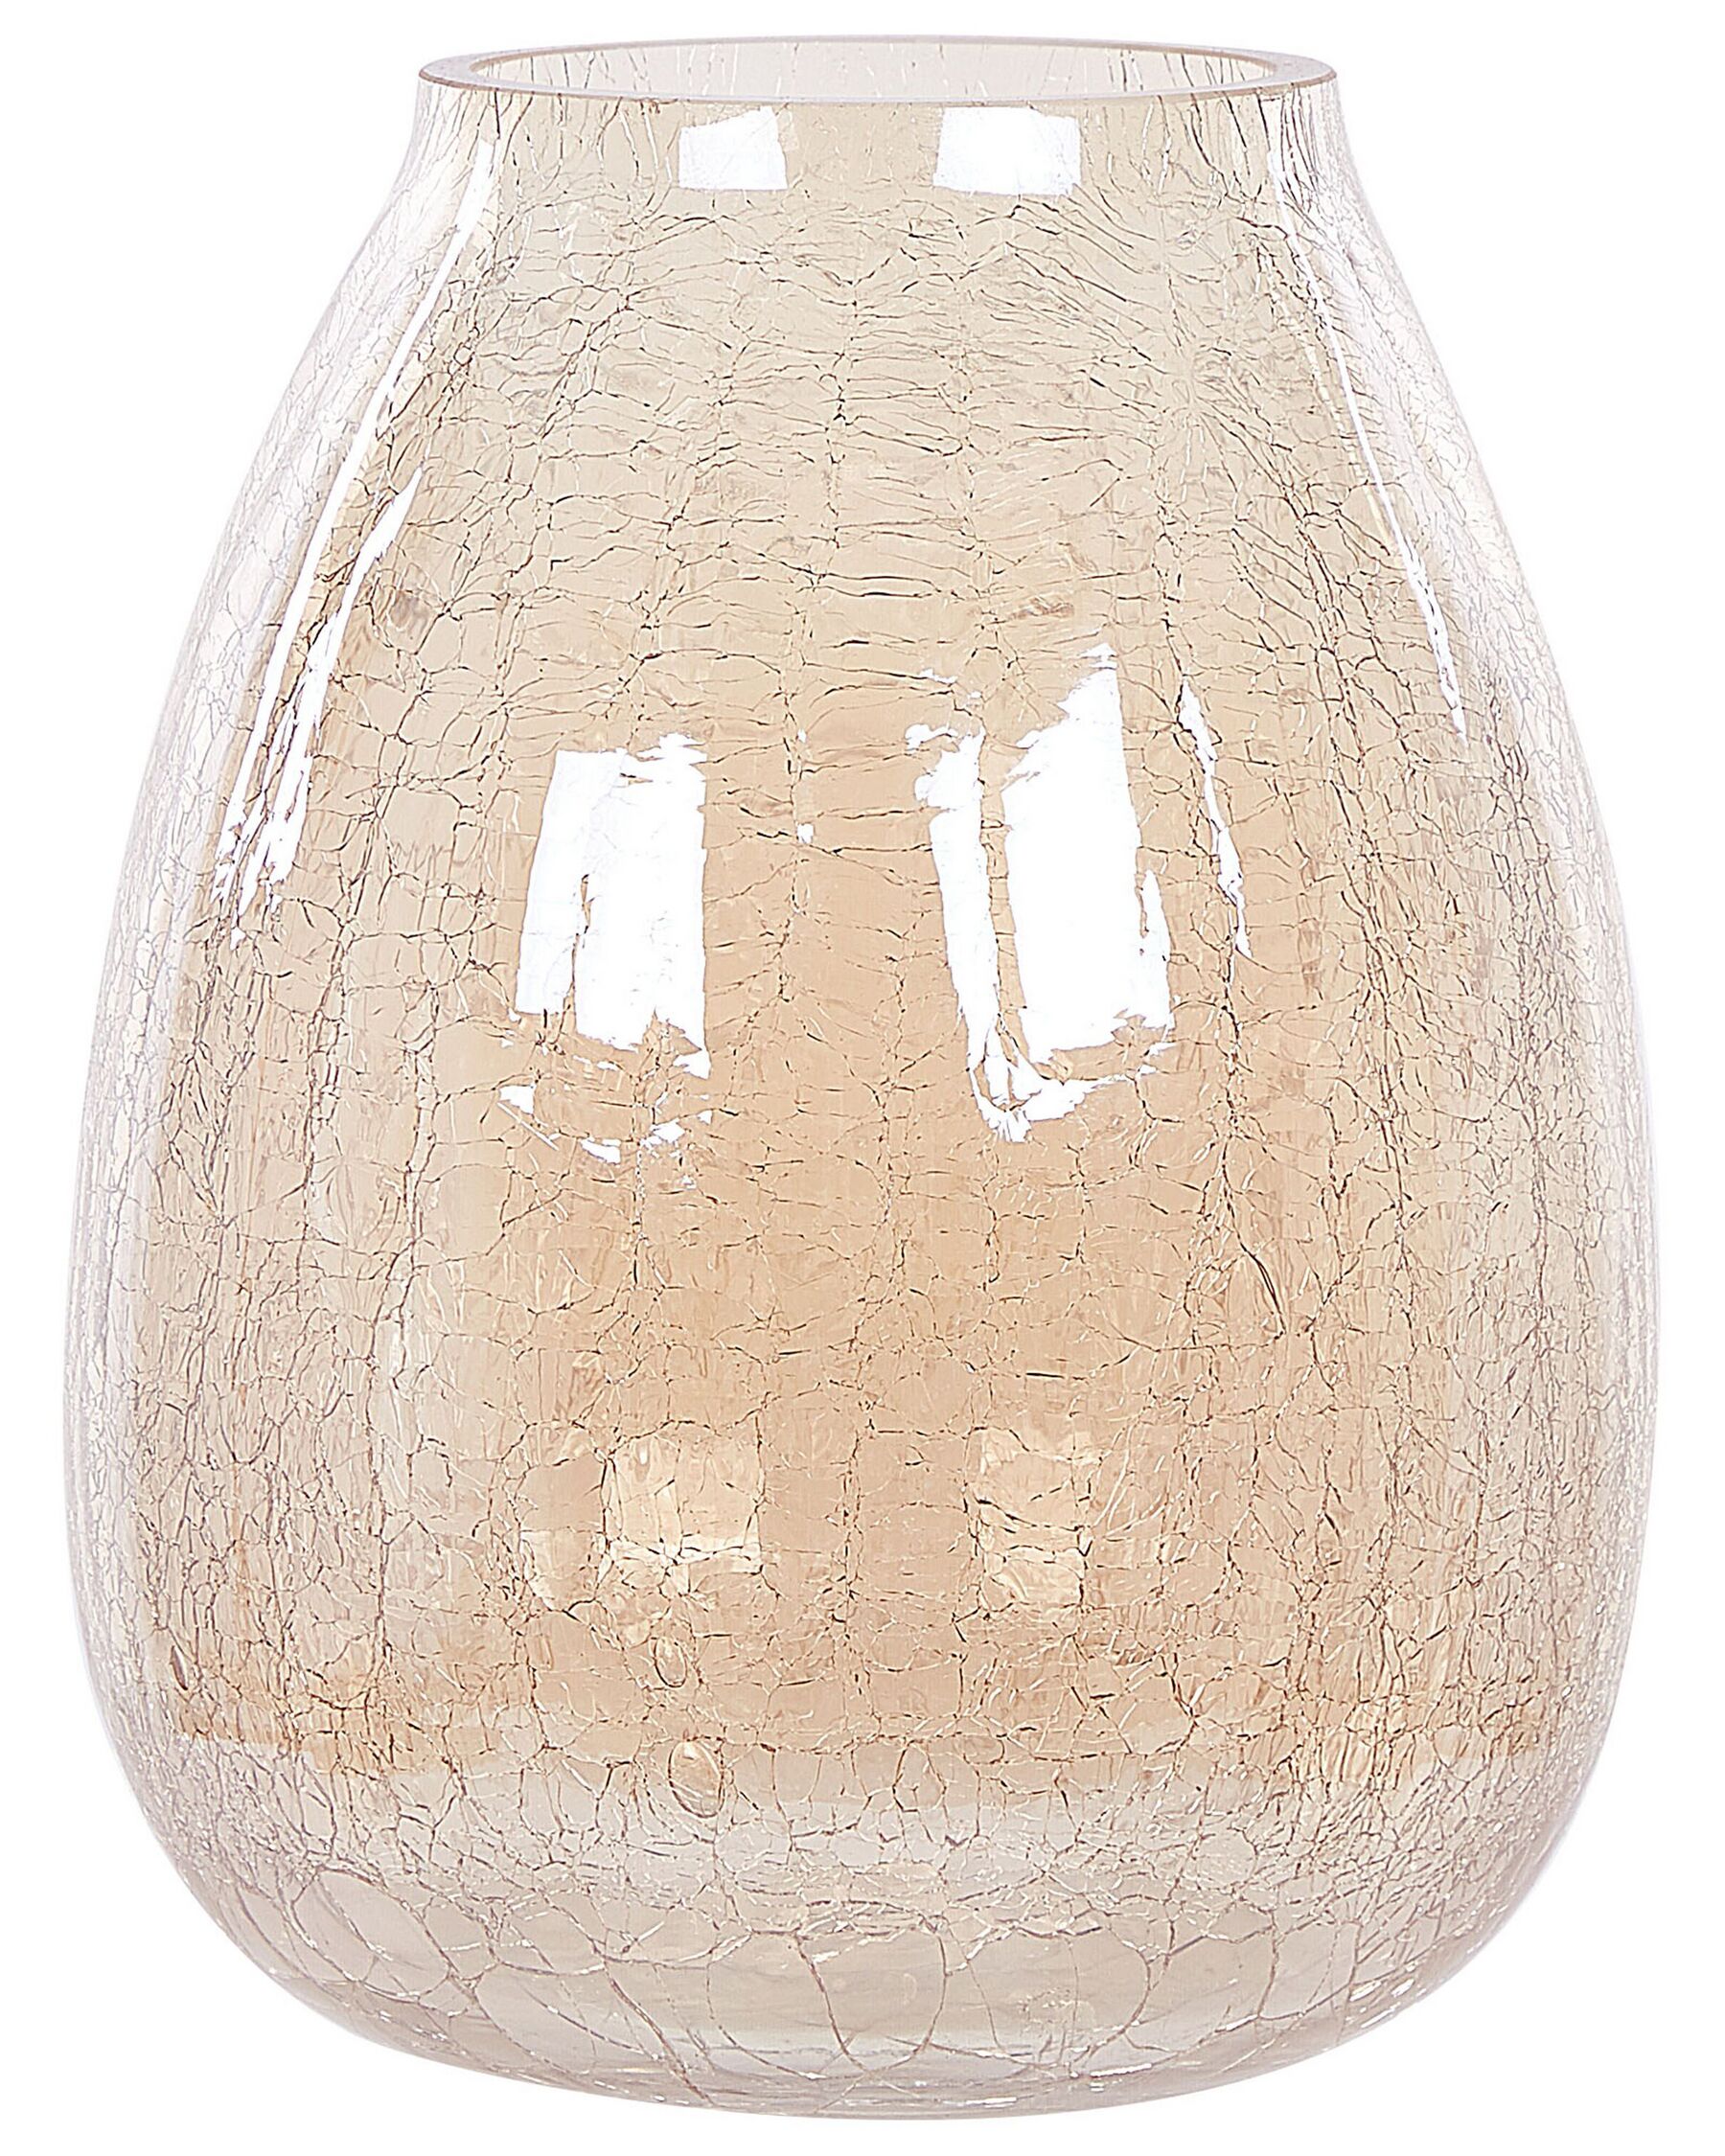 Glass Flower Vase 22 cm with Crackle Effect Light Beige LIKOPORIA_838160